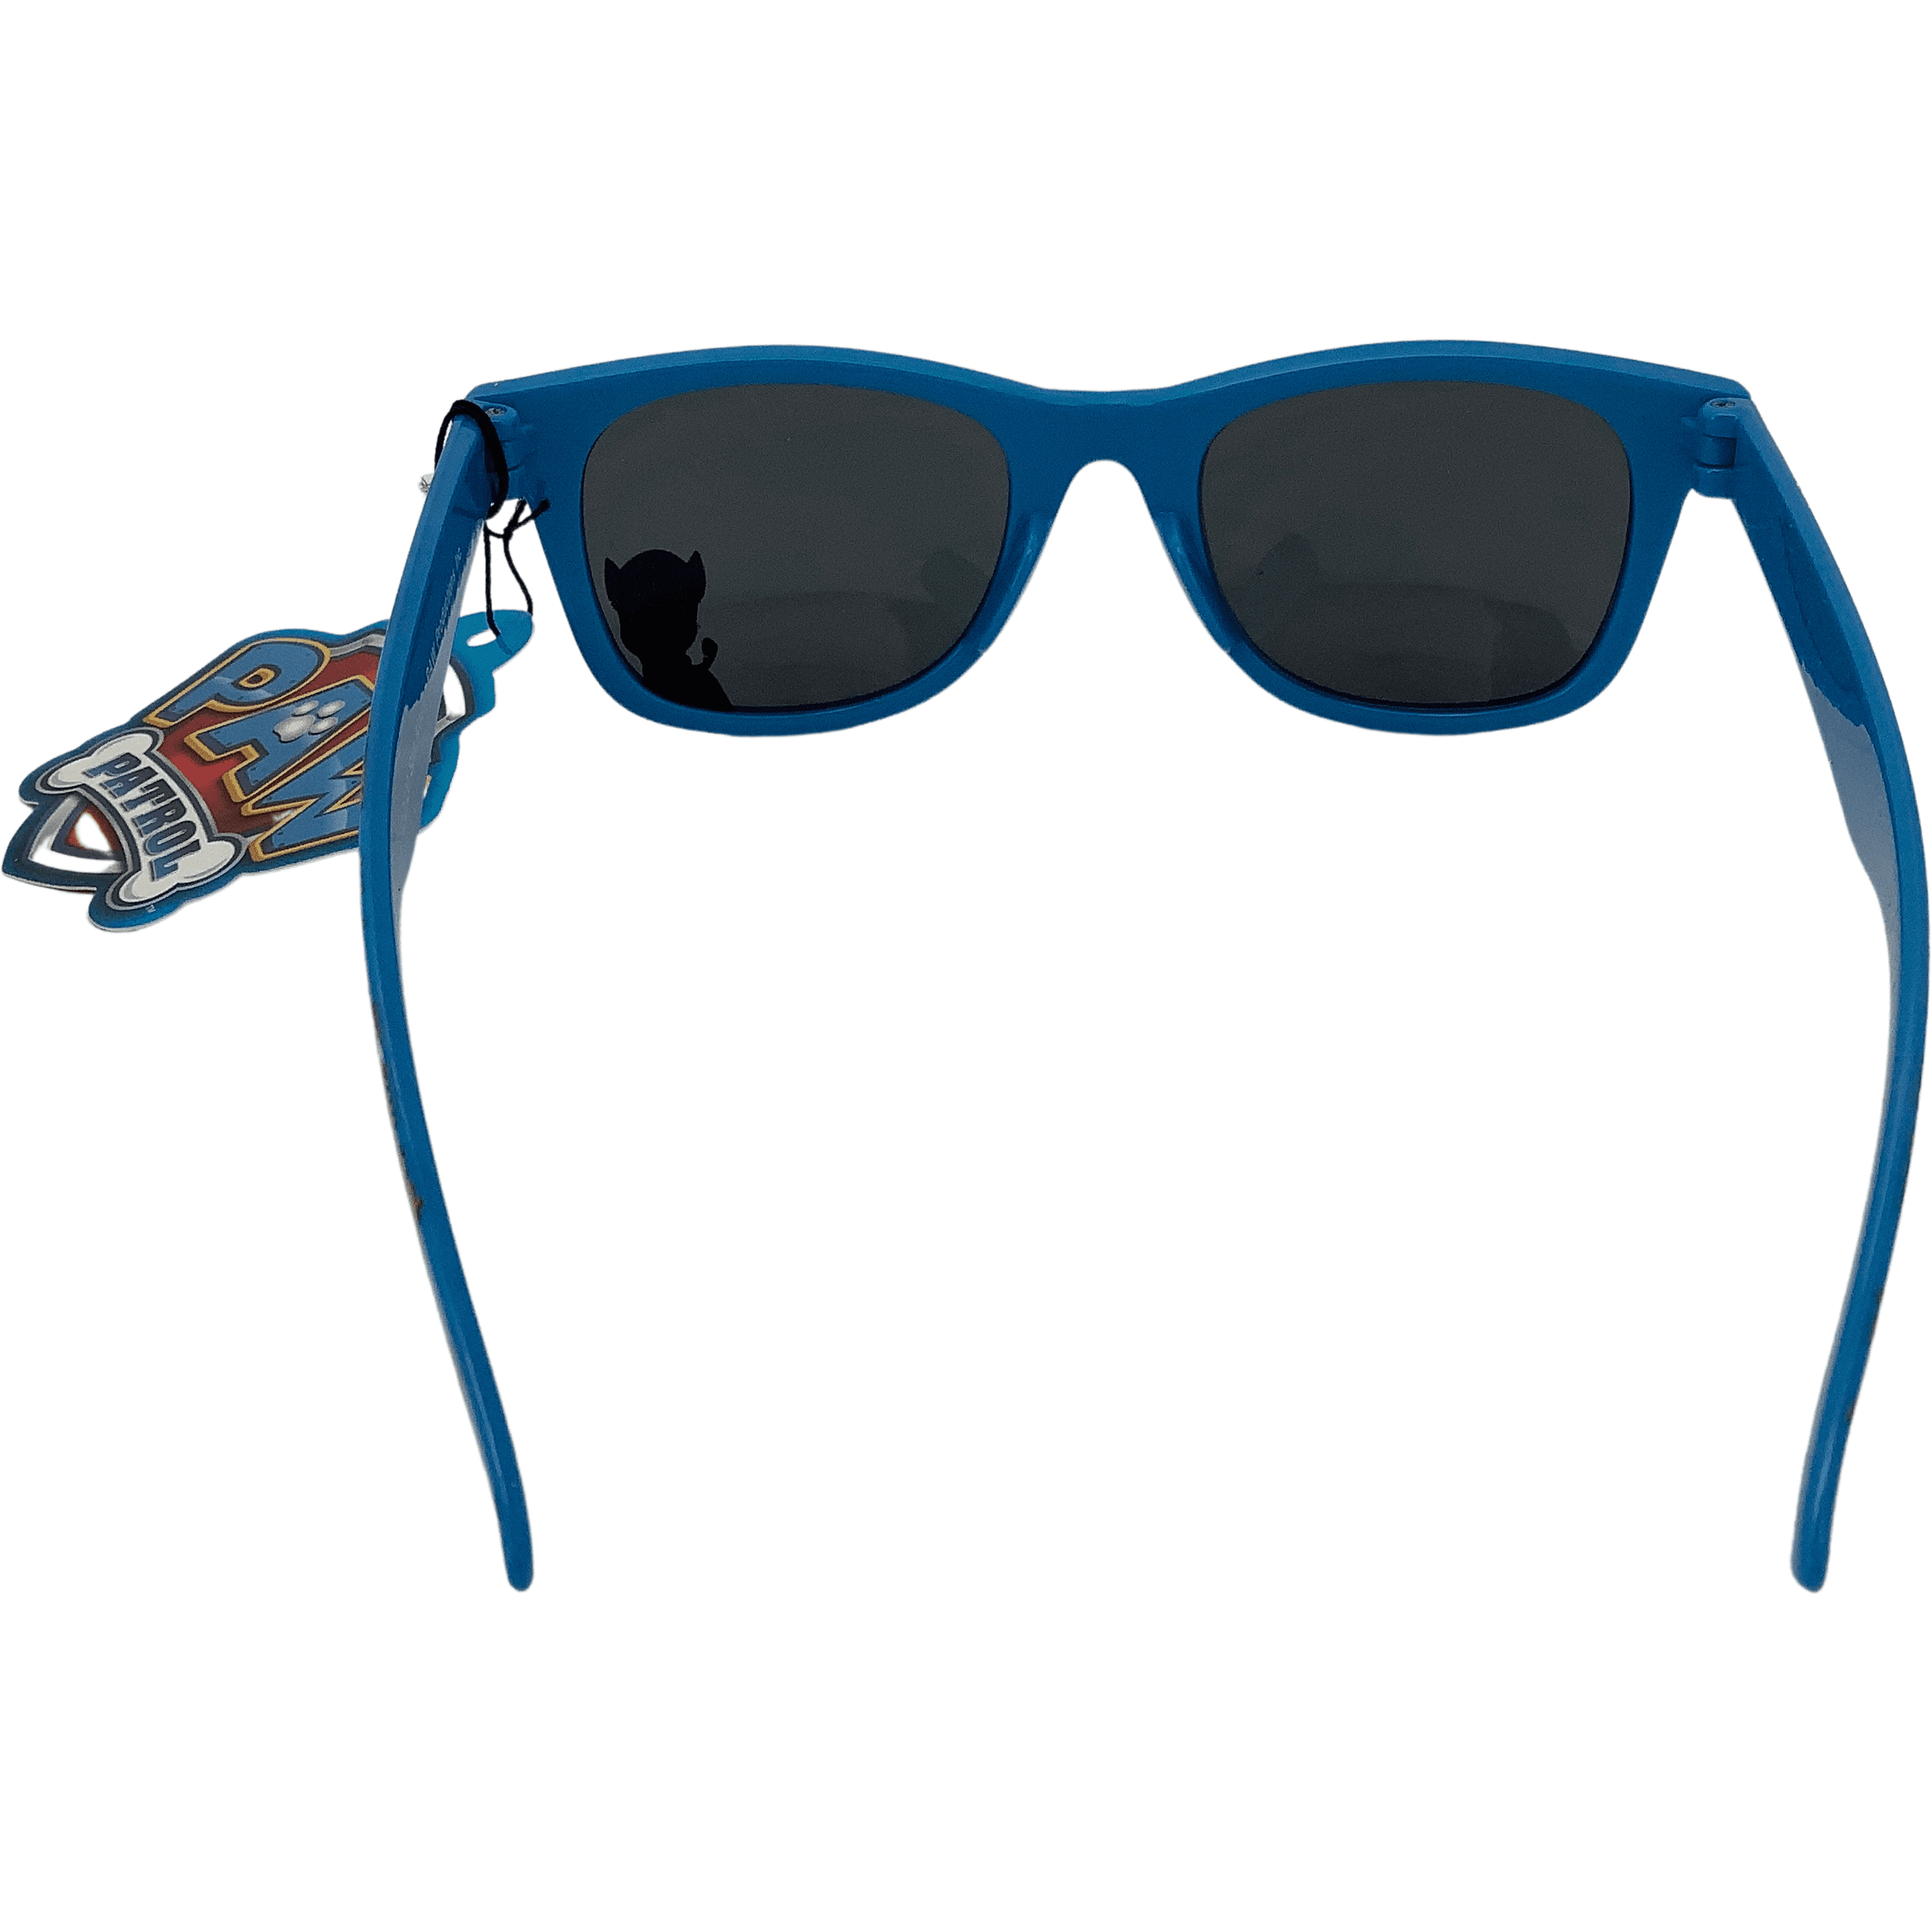 Nickelodeons Paw Patrol Kid's Sunglasses / Children's Eye Wear / UV Protection